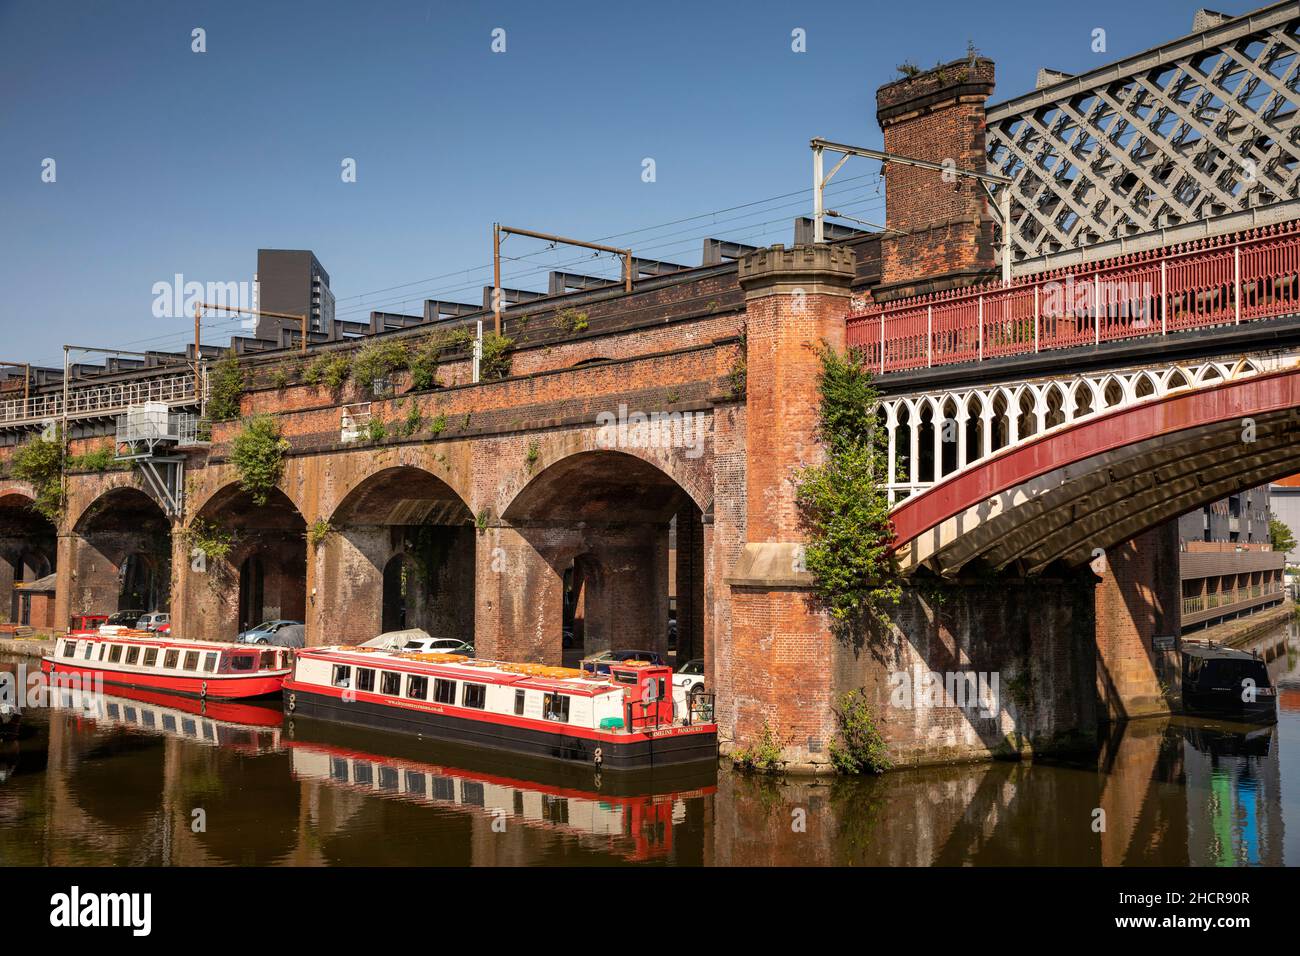 UK, England, Manchester, Castlefield, City Centre Cruise narrowboats moored on Bridgewater Canal below Metrolink Railway Viaduct Stock Photo